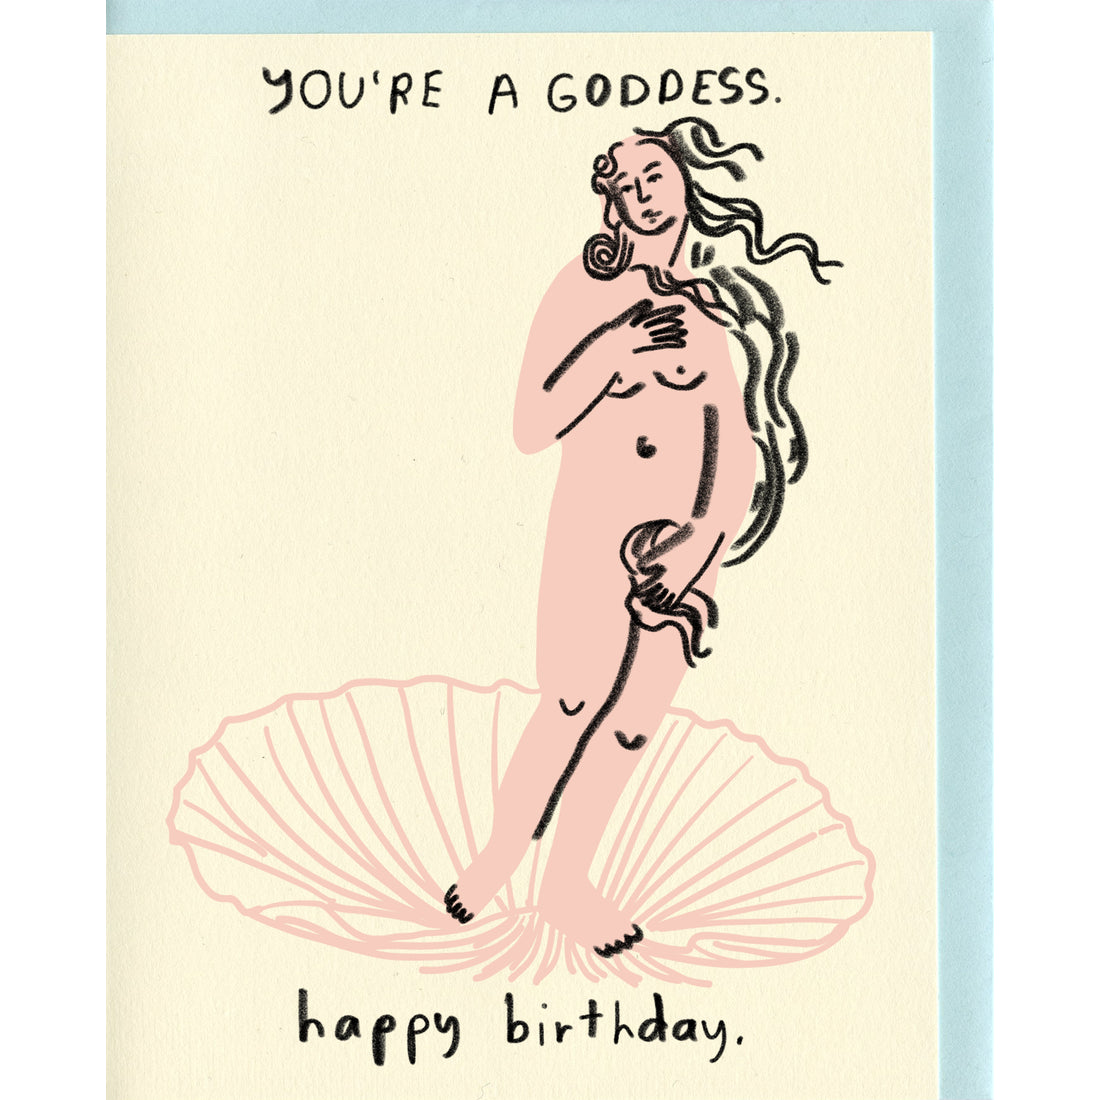 you're a goddess, happy birthday card